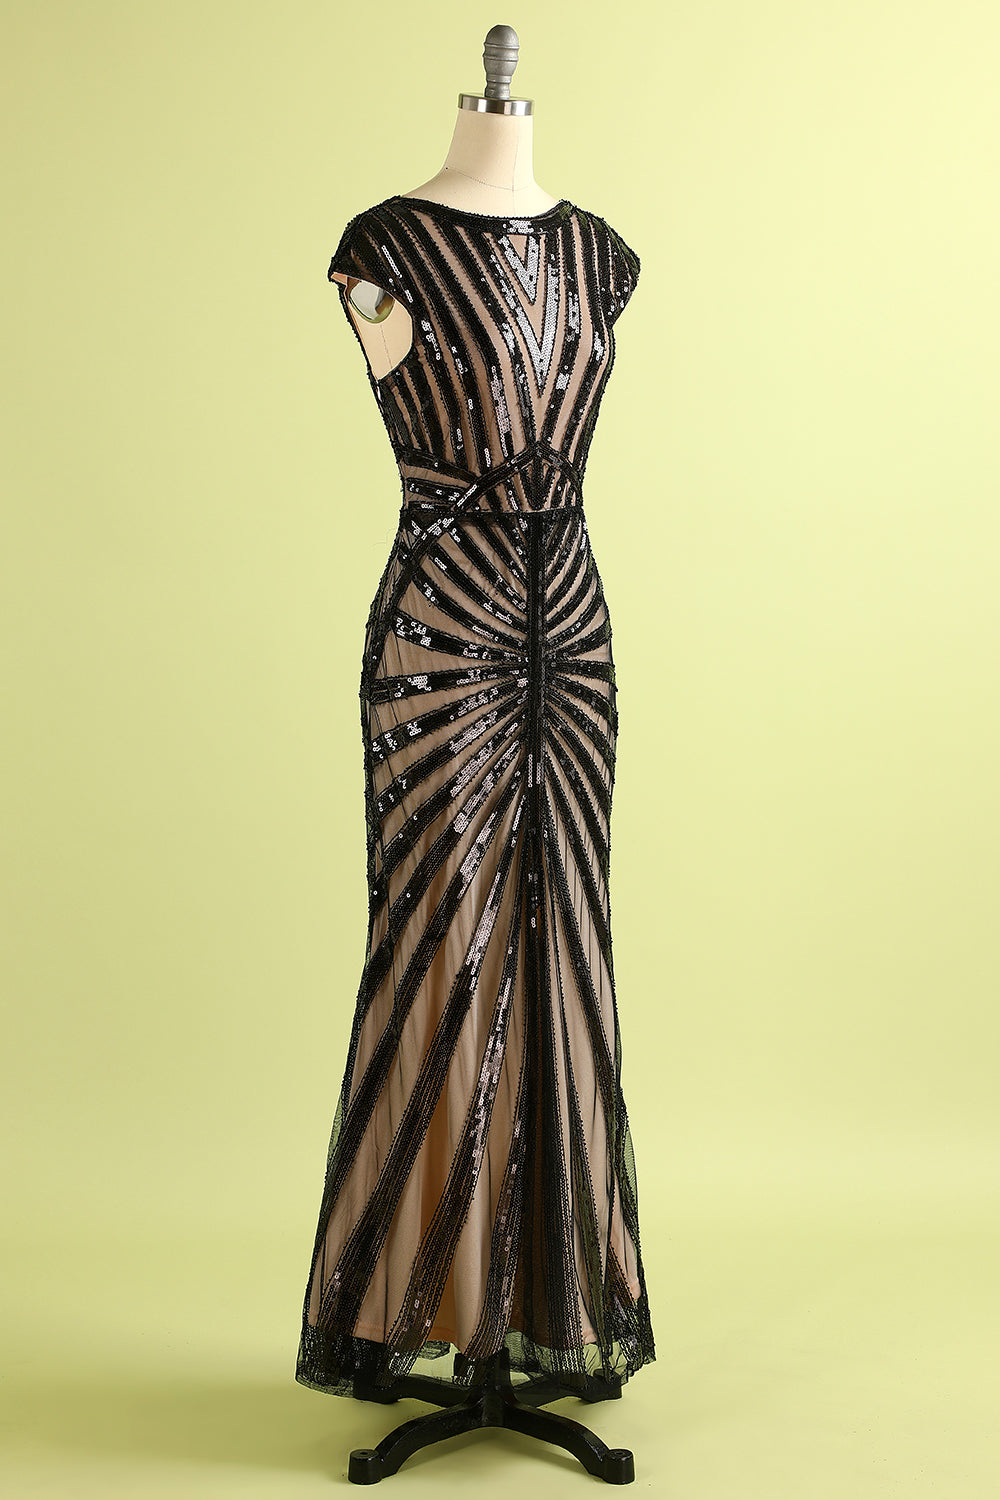 Sequined Mermaid 1920s Dress